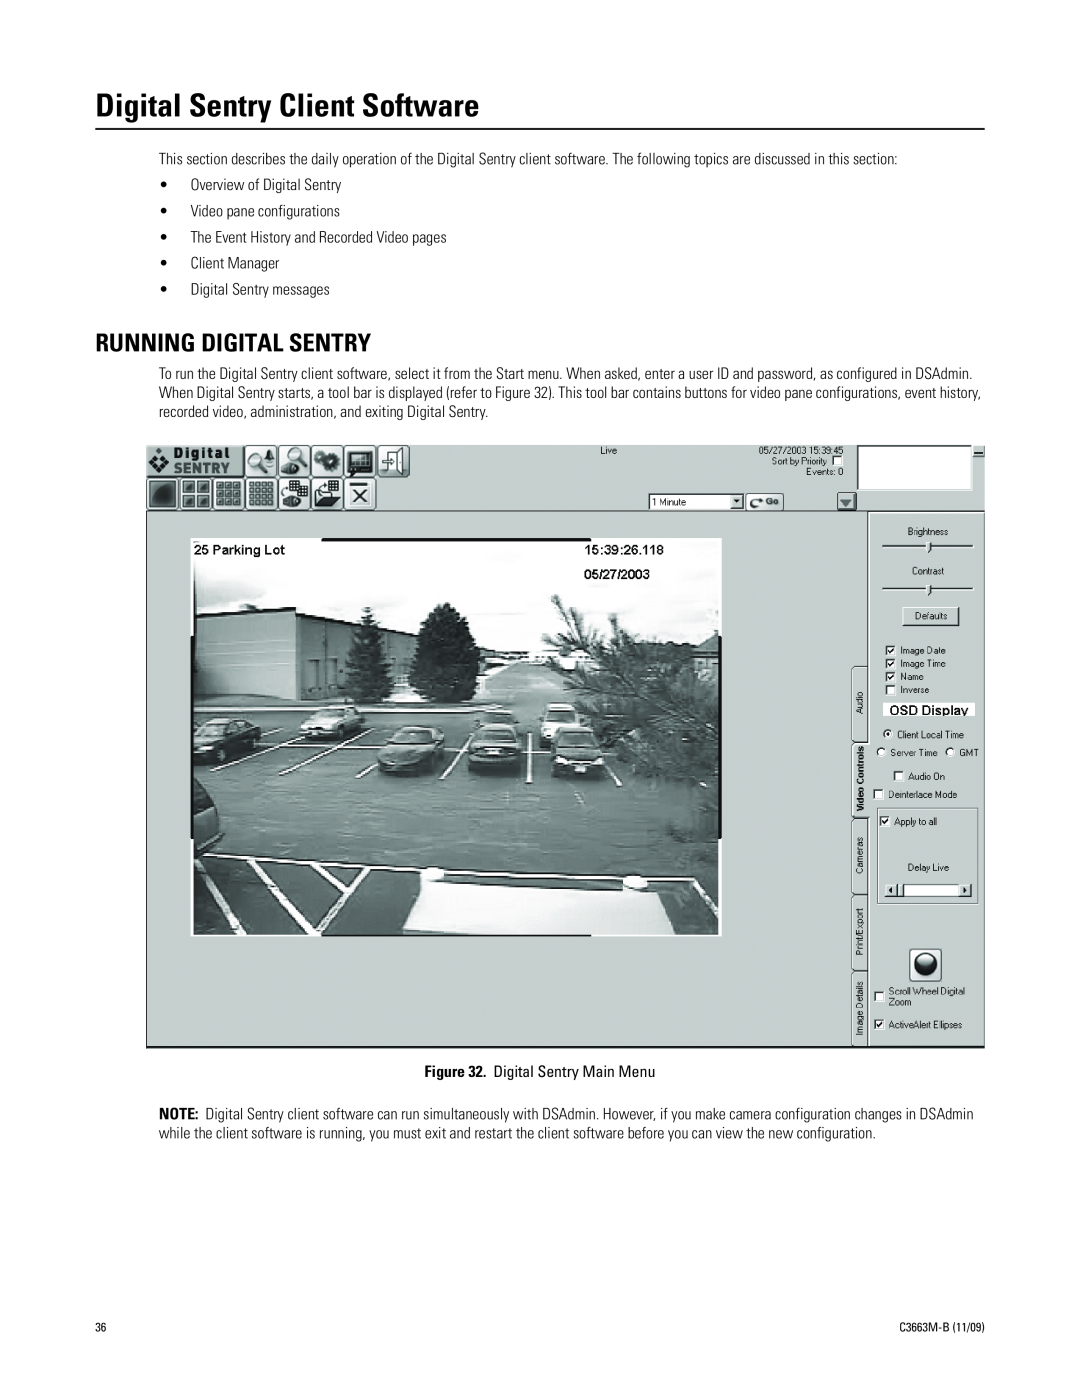 Pelco DS NVS manual Digital Sentry Client Software, Running Digital Sentry 